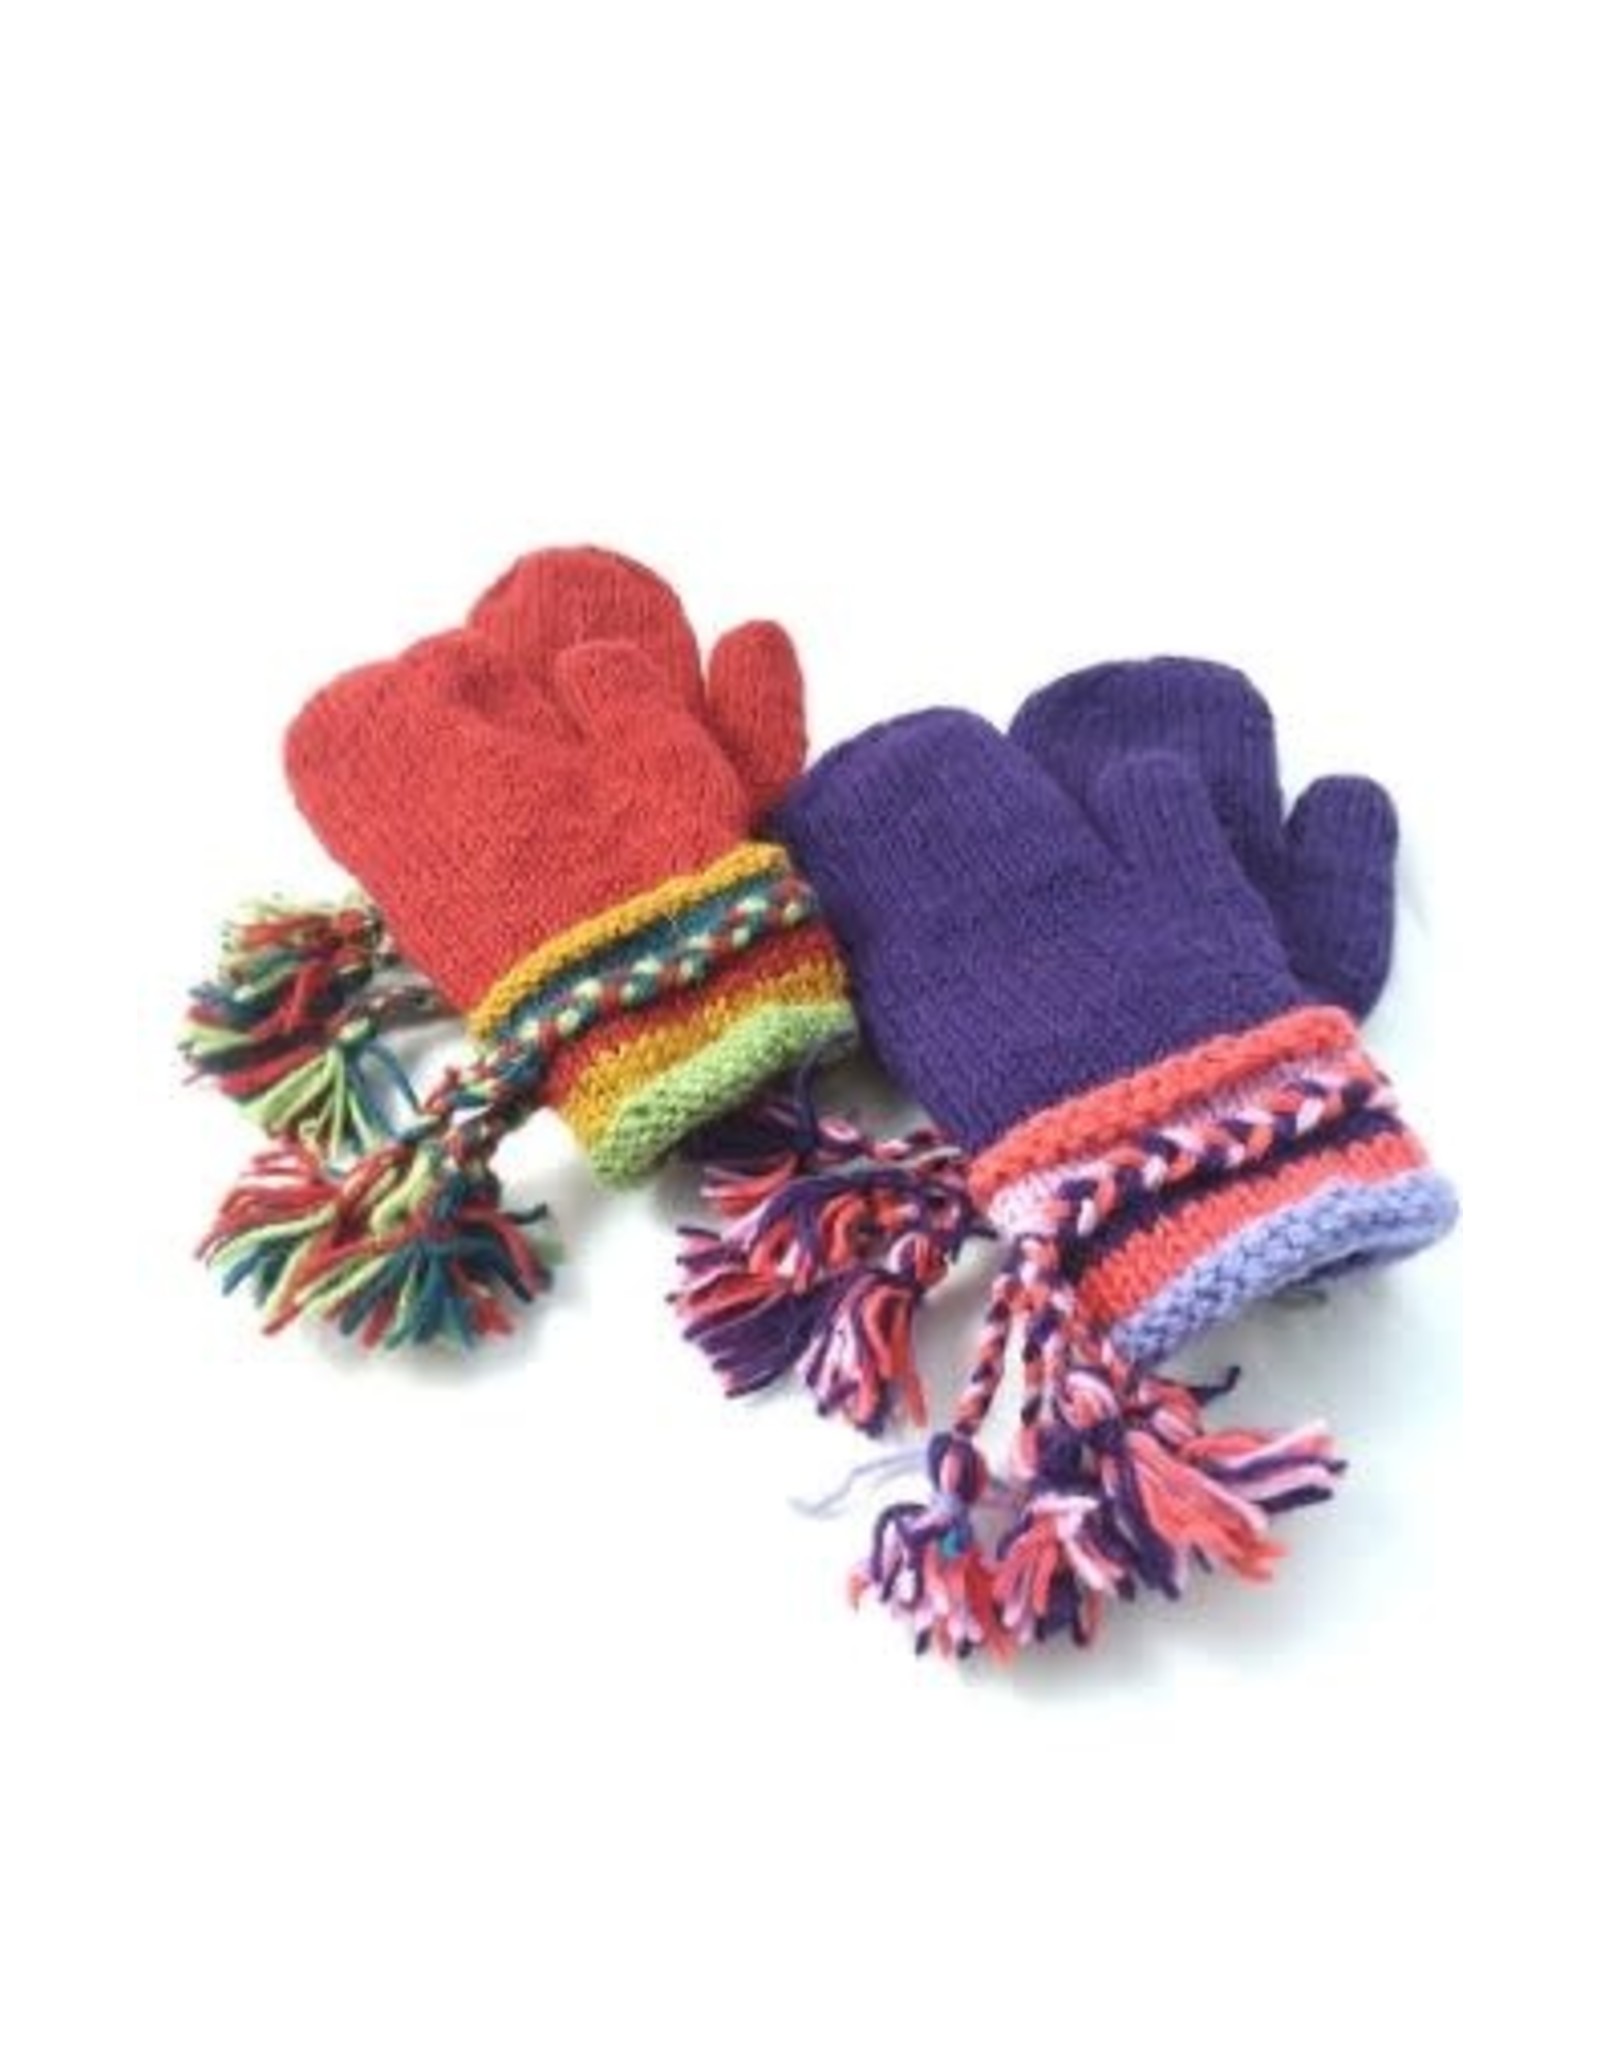 Trade roots Wool Knit Fleece Lined Mittens w/ Braid and Tassle Cuff, Nepal